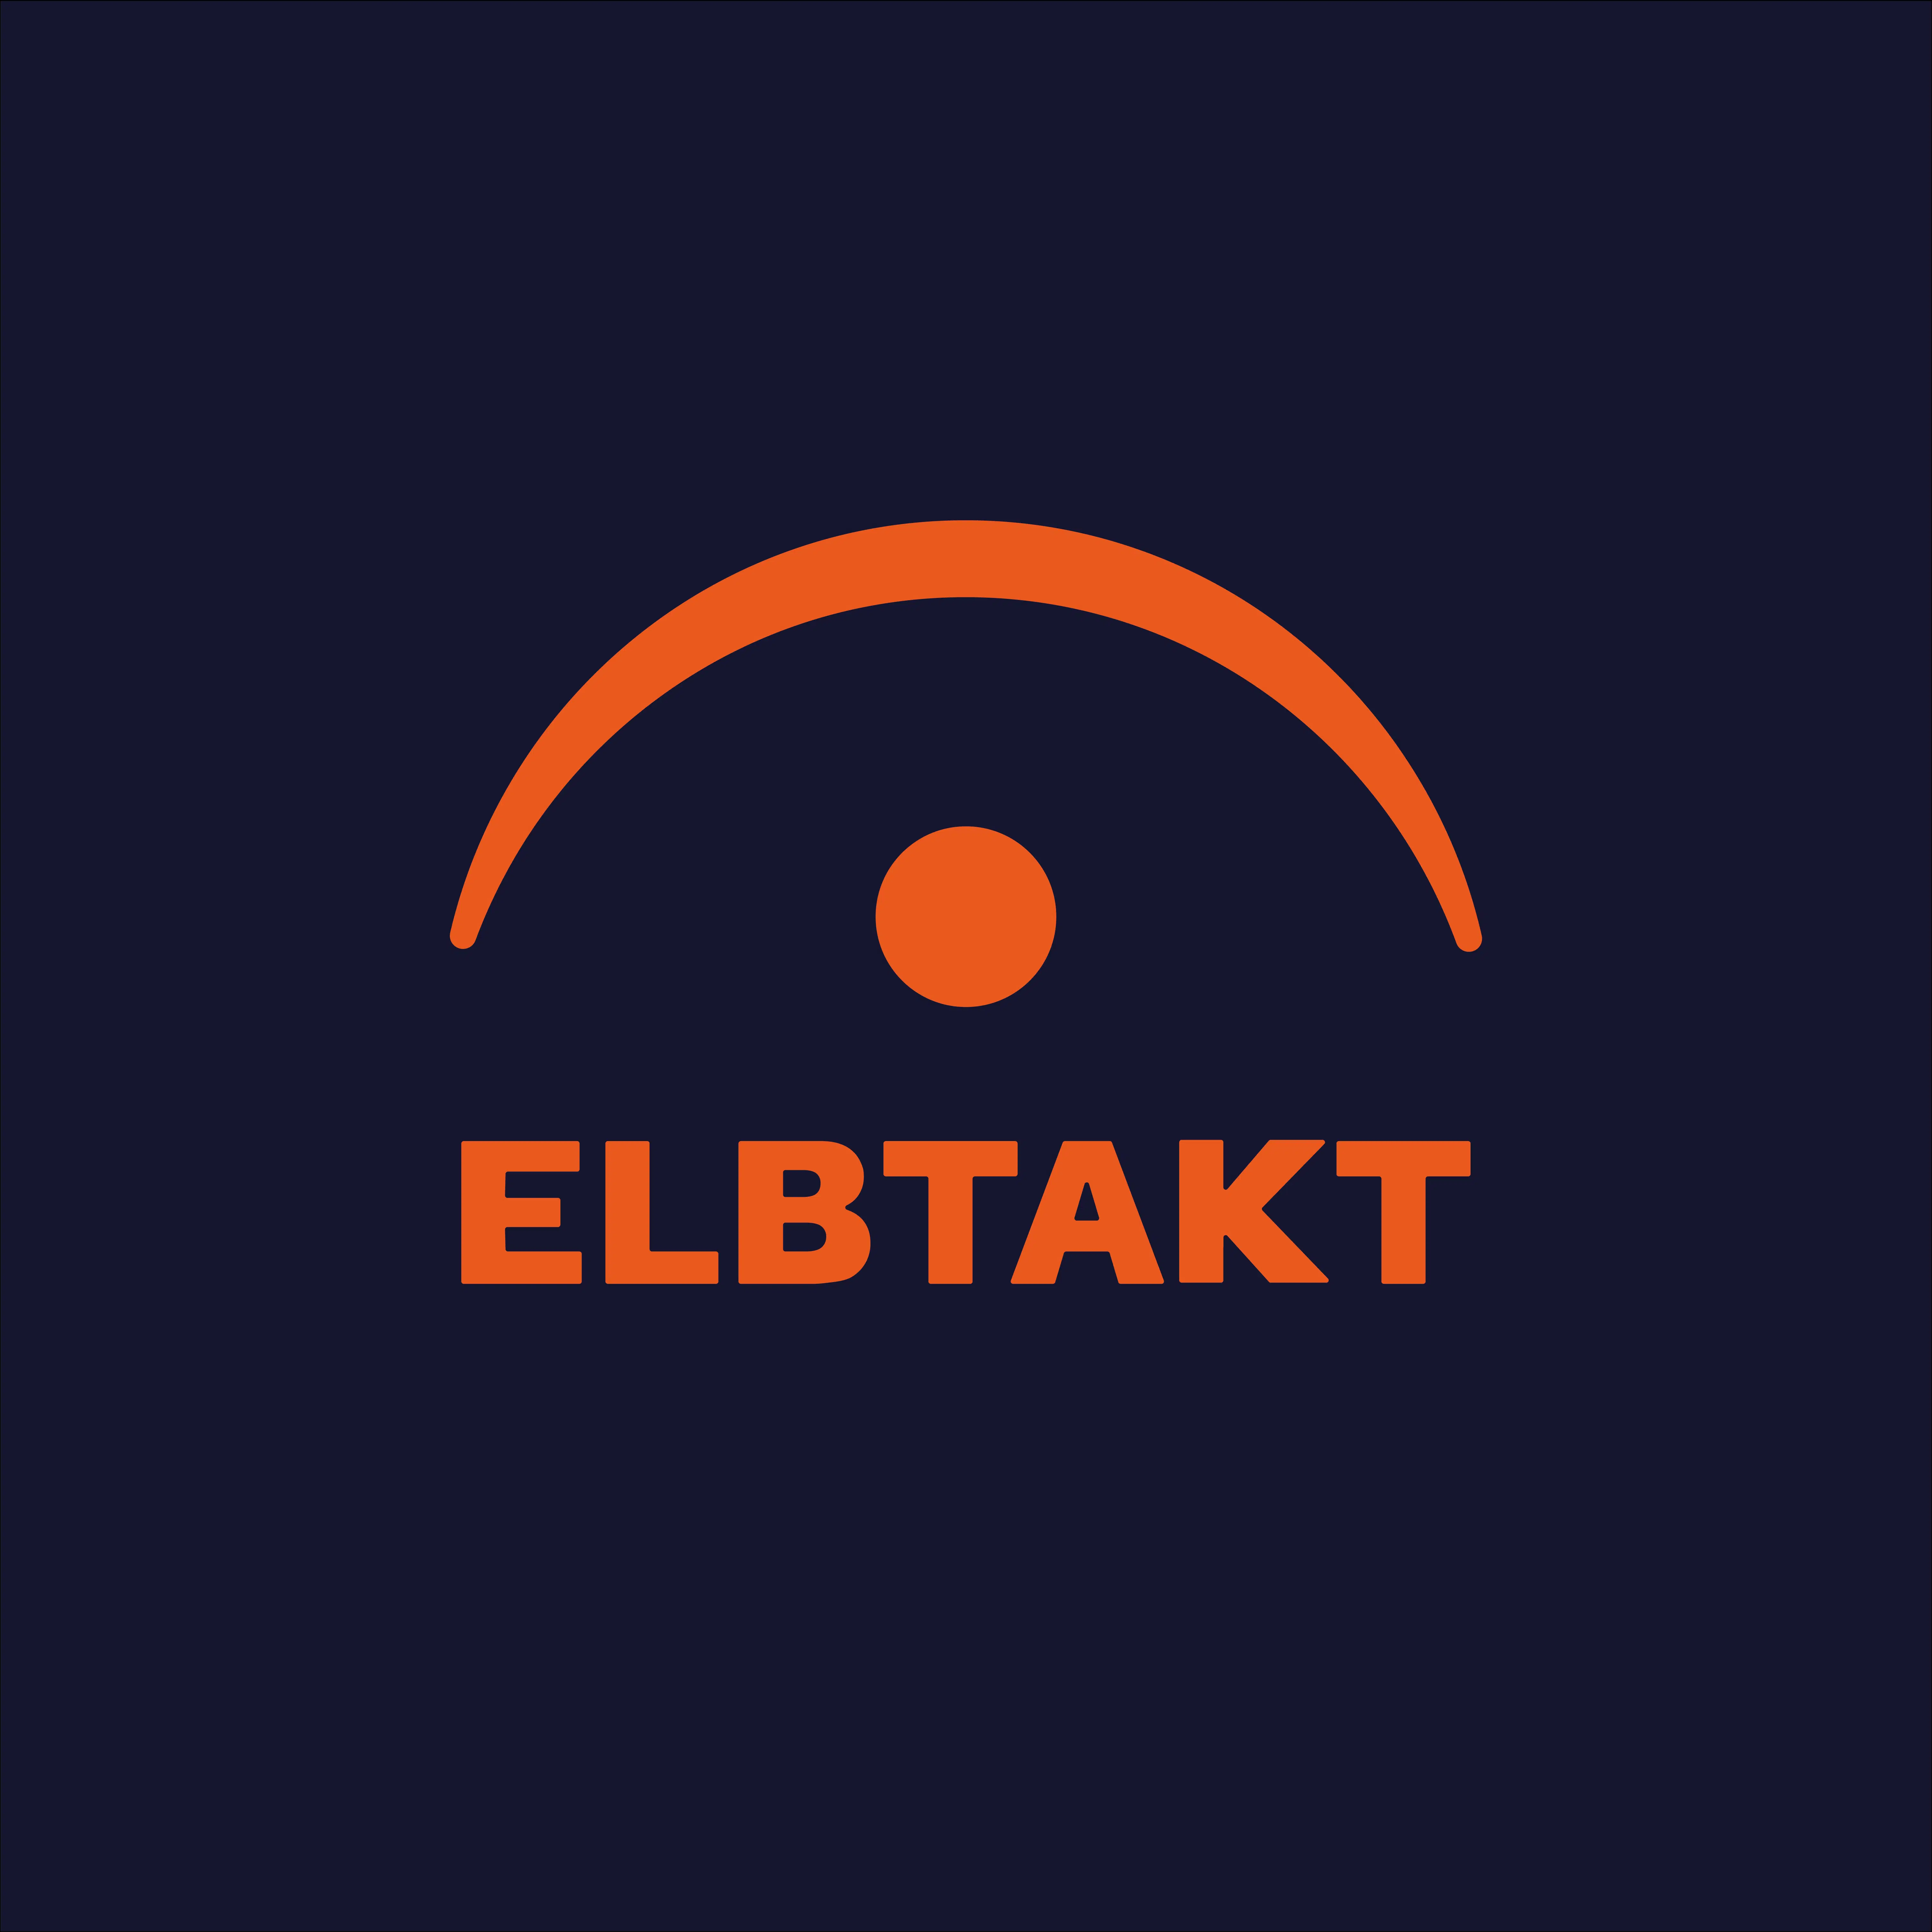 The logo of Elbtakt GmbH & Co. KG